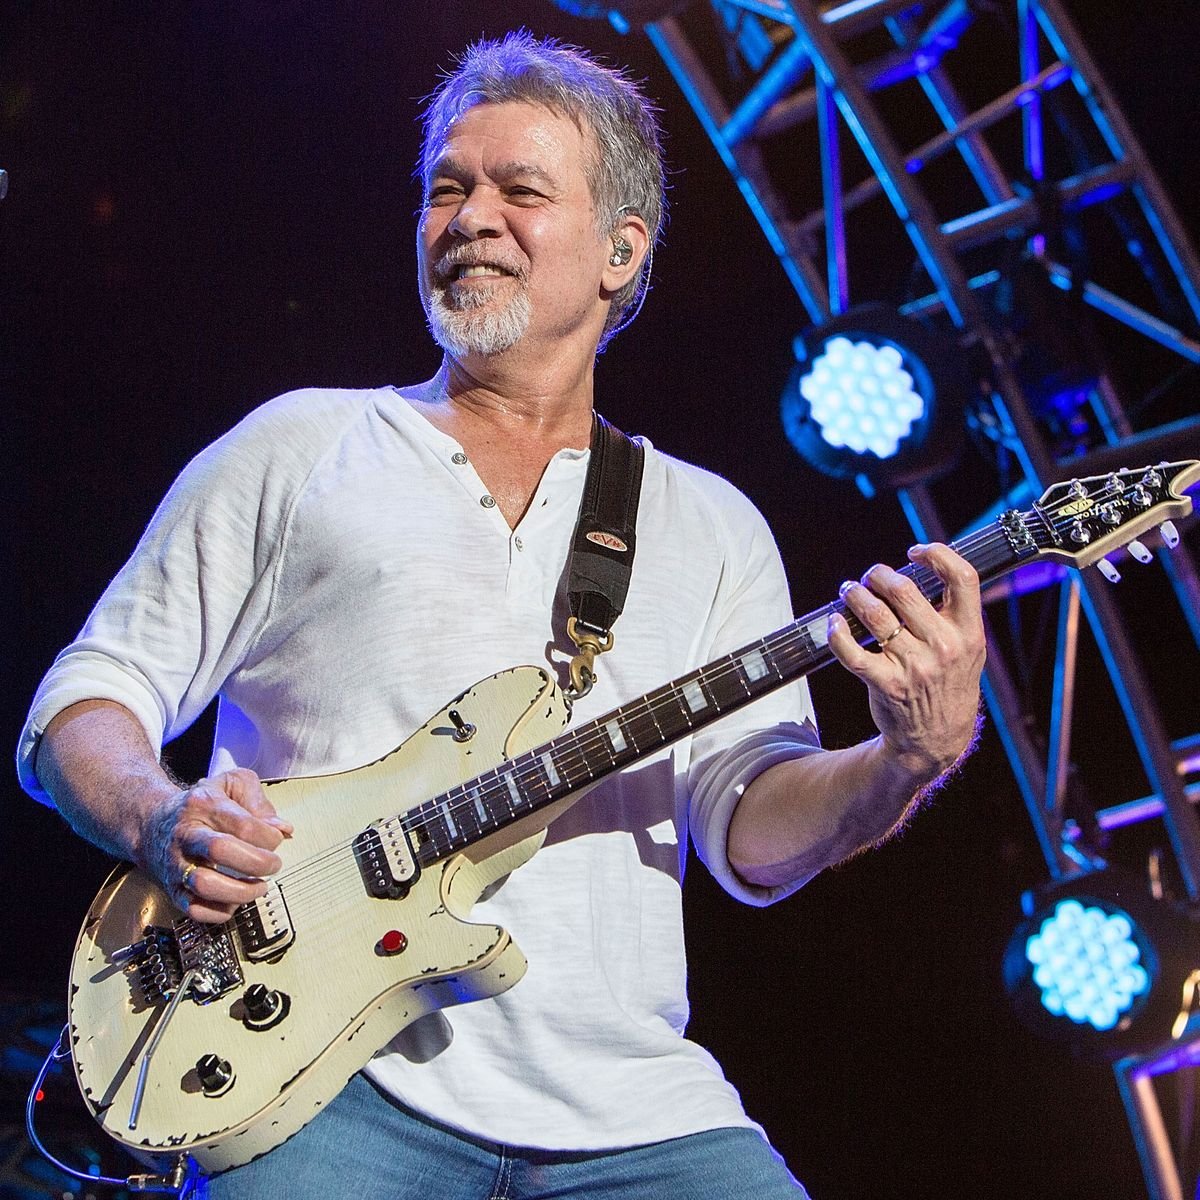  A murit Eddie Van Halen, chitarist şi fondator al trupei Van Halen